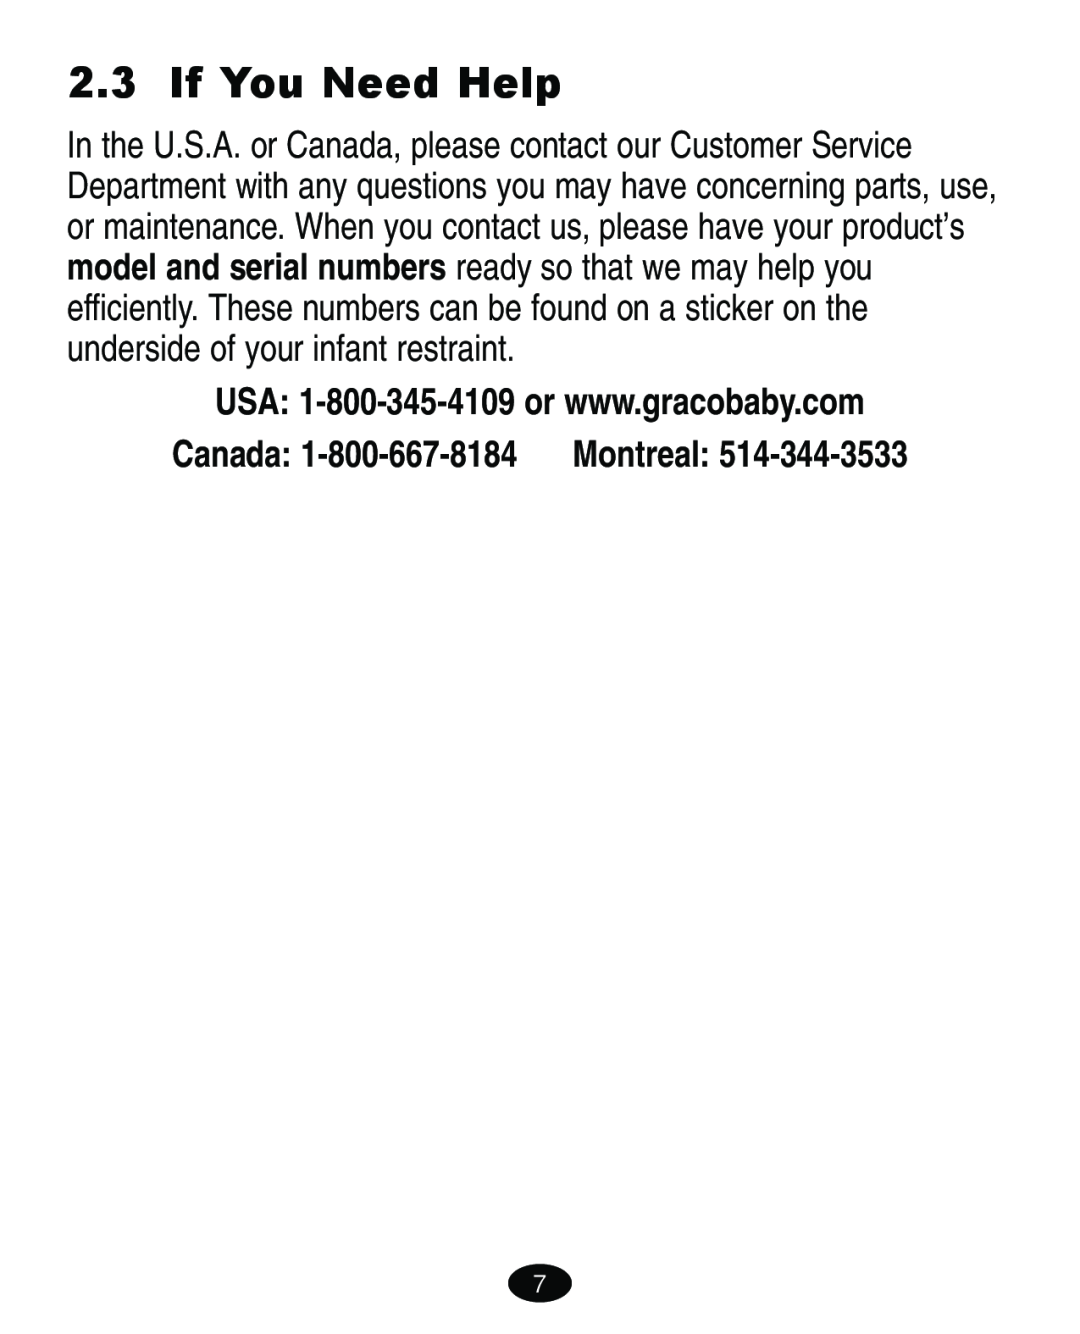 Graco ISPA109AC manual If You Need Help, Canada, Montreal 